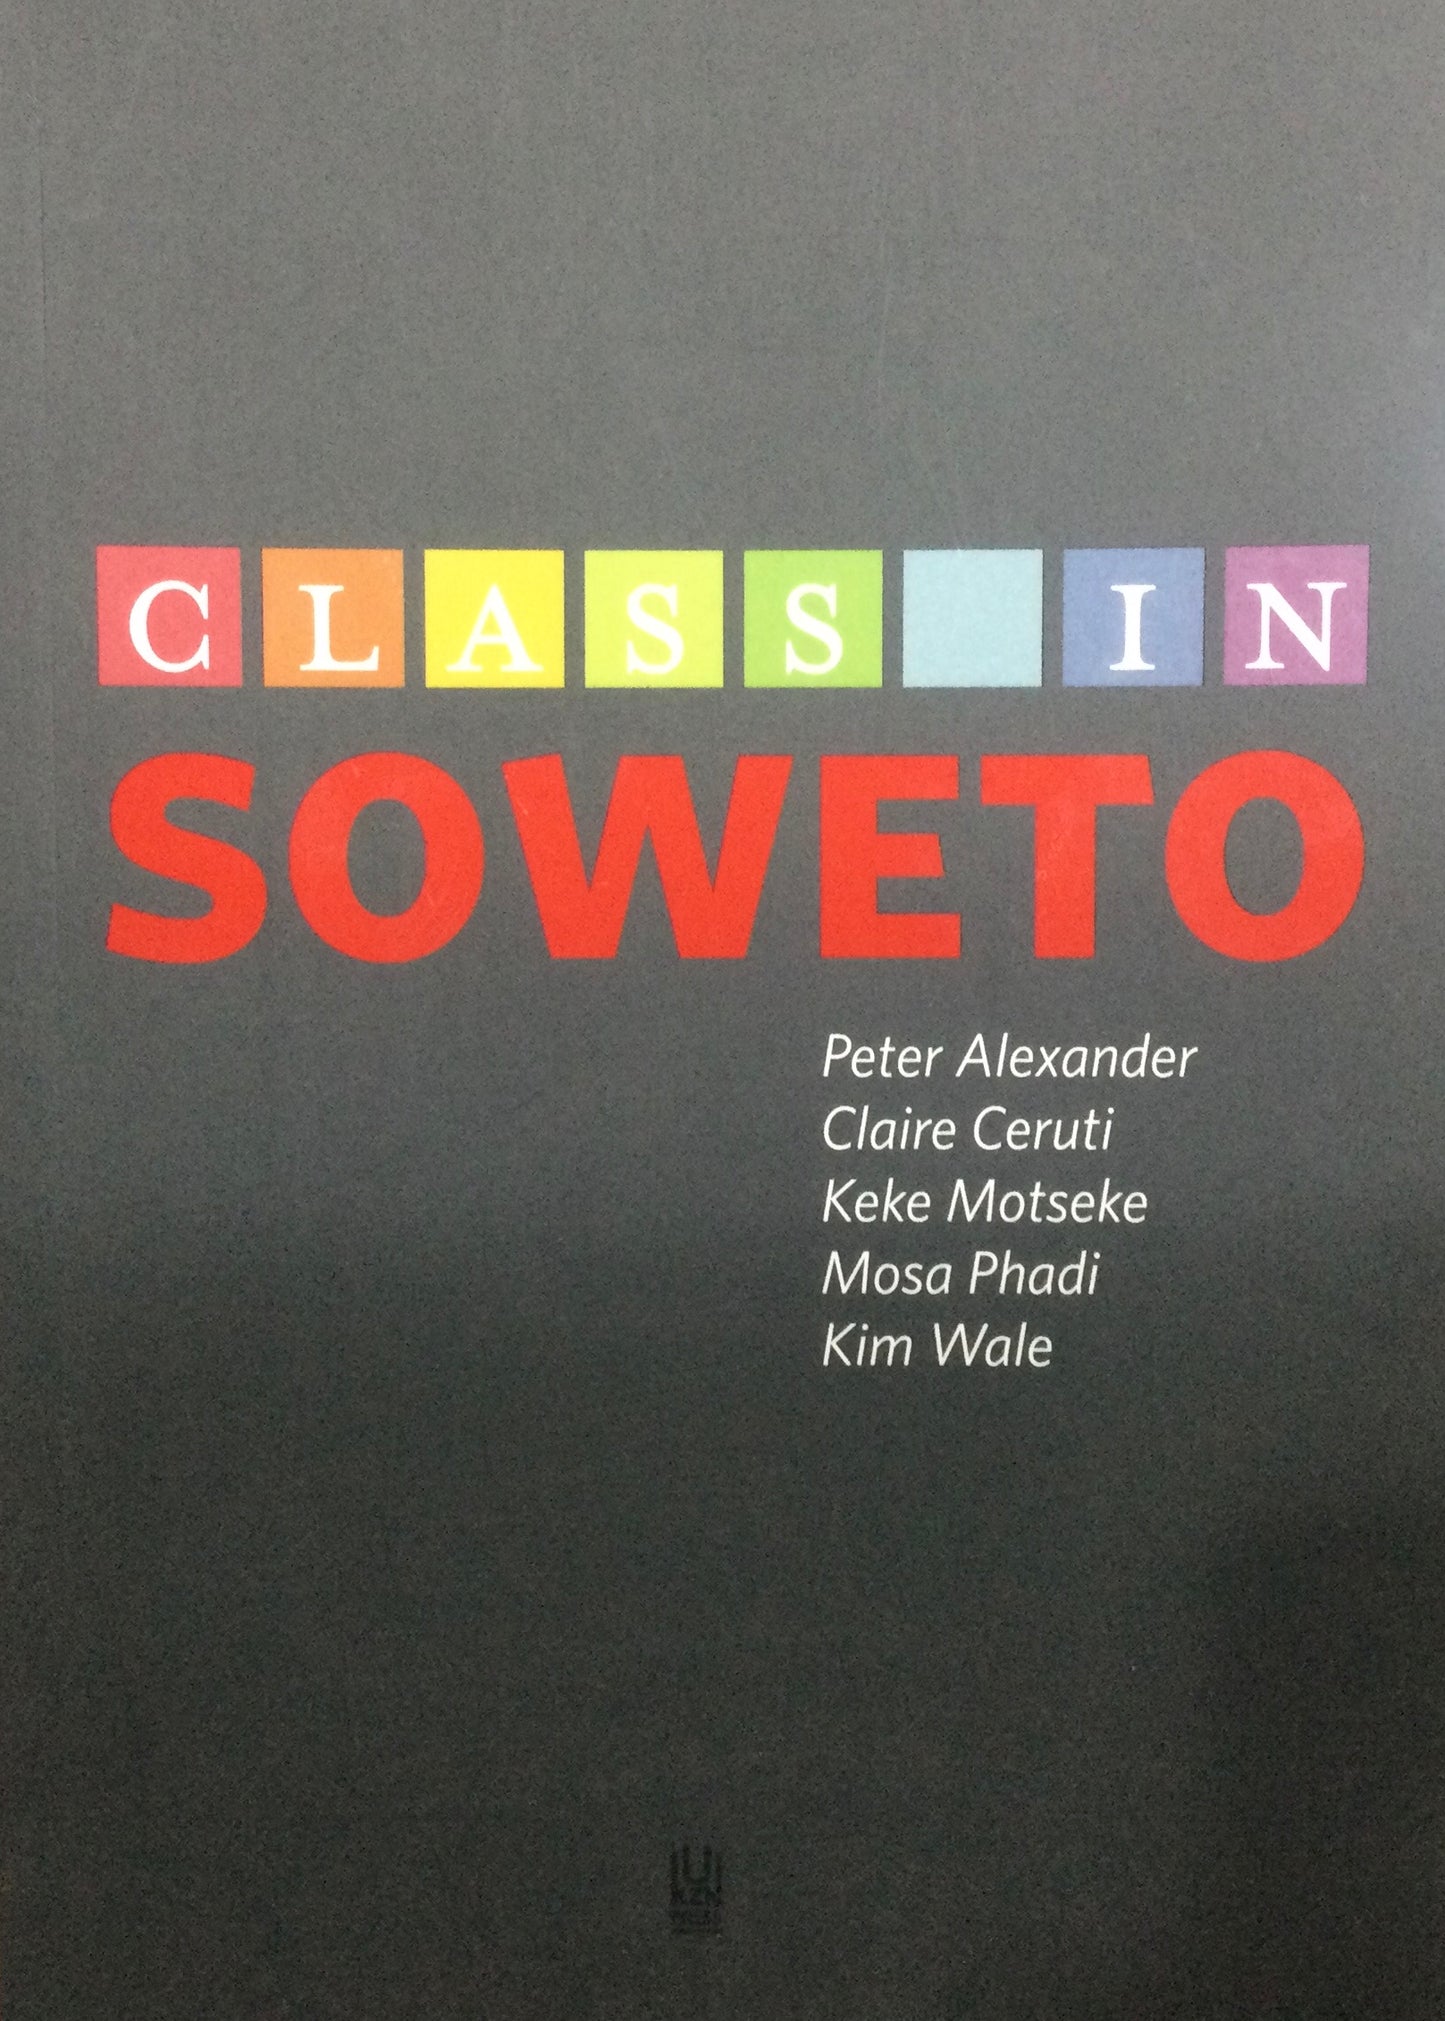 Class In Soweto, by Peter Aalexander, Claire Ceruti, Keke Motseke, Mosa Phadi, & Kim Wale